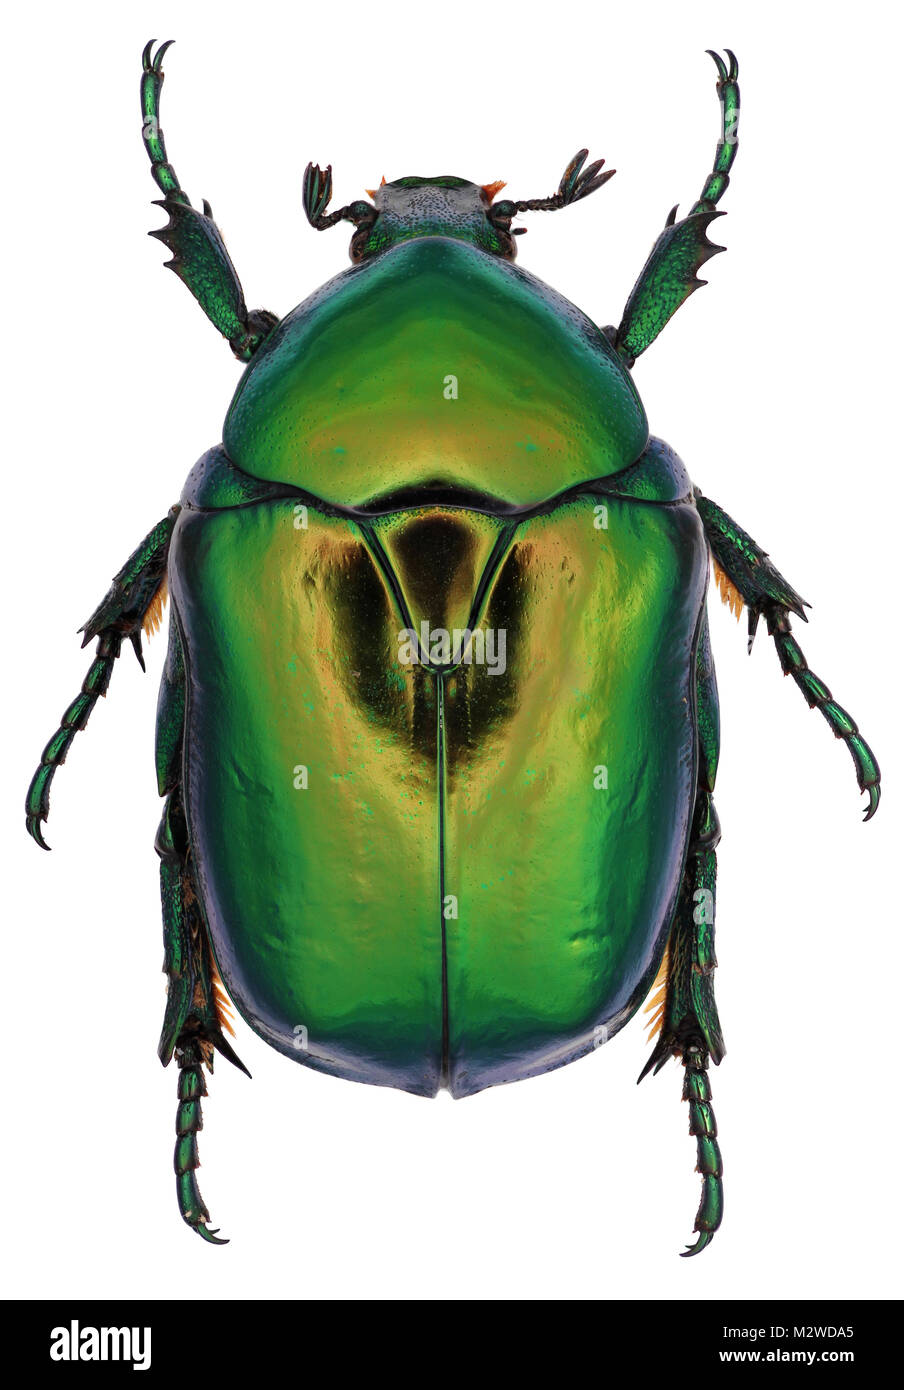 Beetle Protaetia aeruginosa from family Scarabaeidae. Isolated on a white background Stock Photo